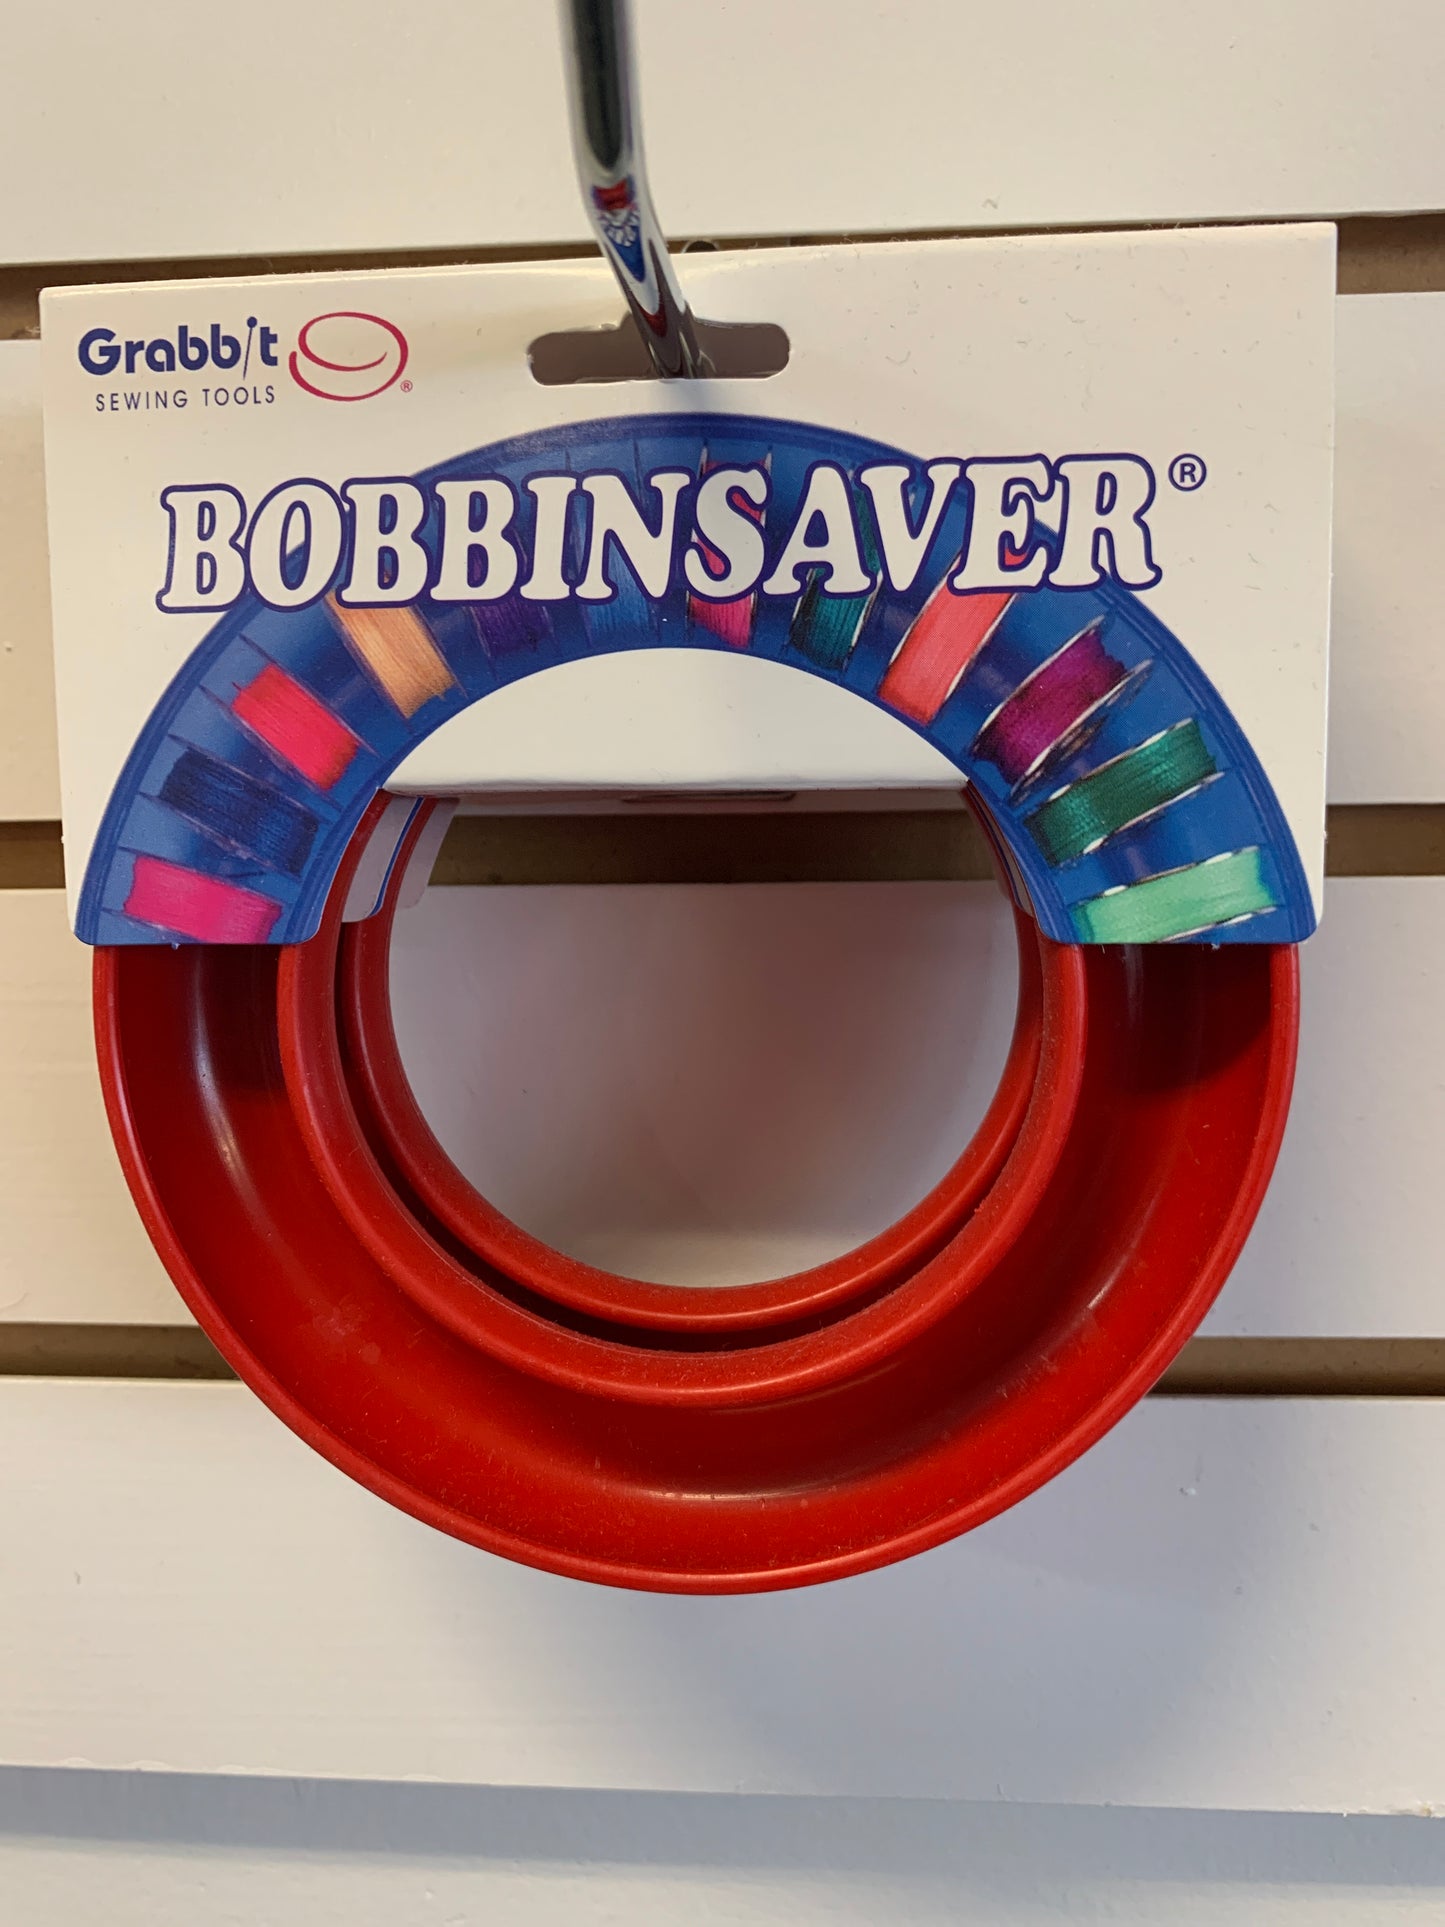 Grabbit Bobbin is Saver